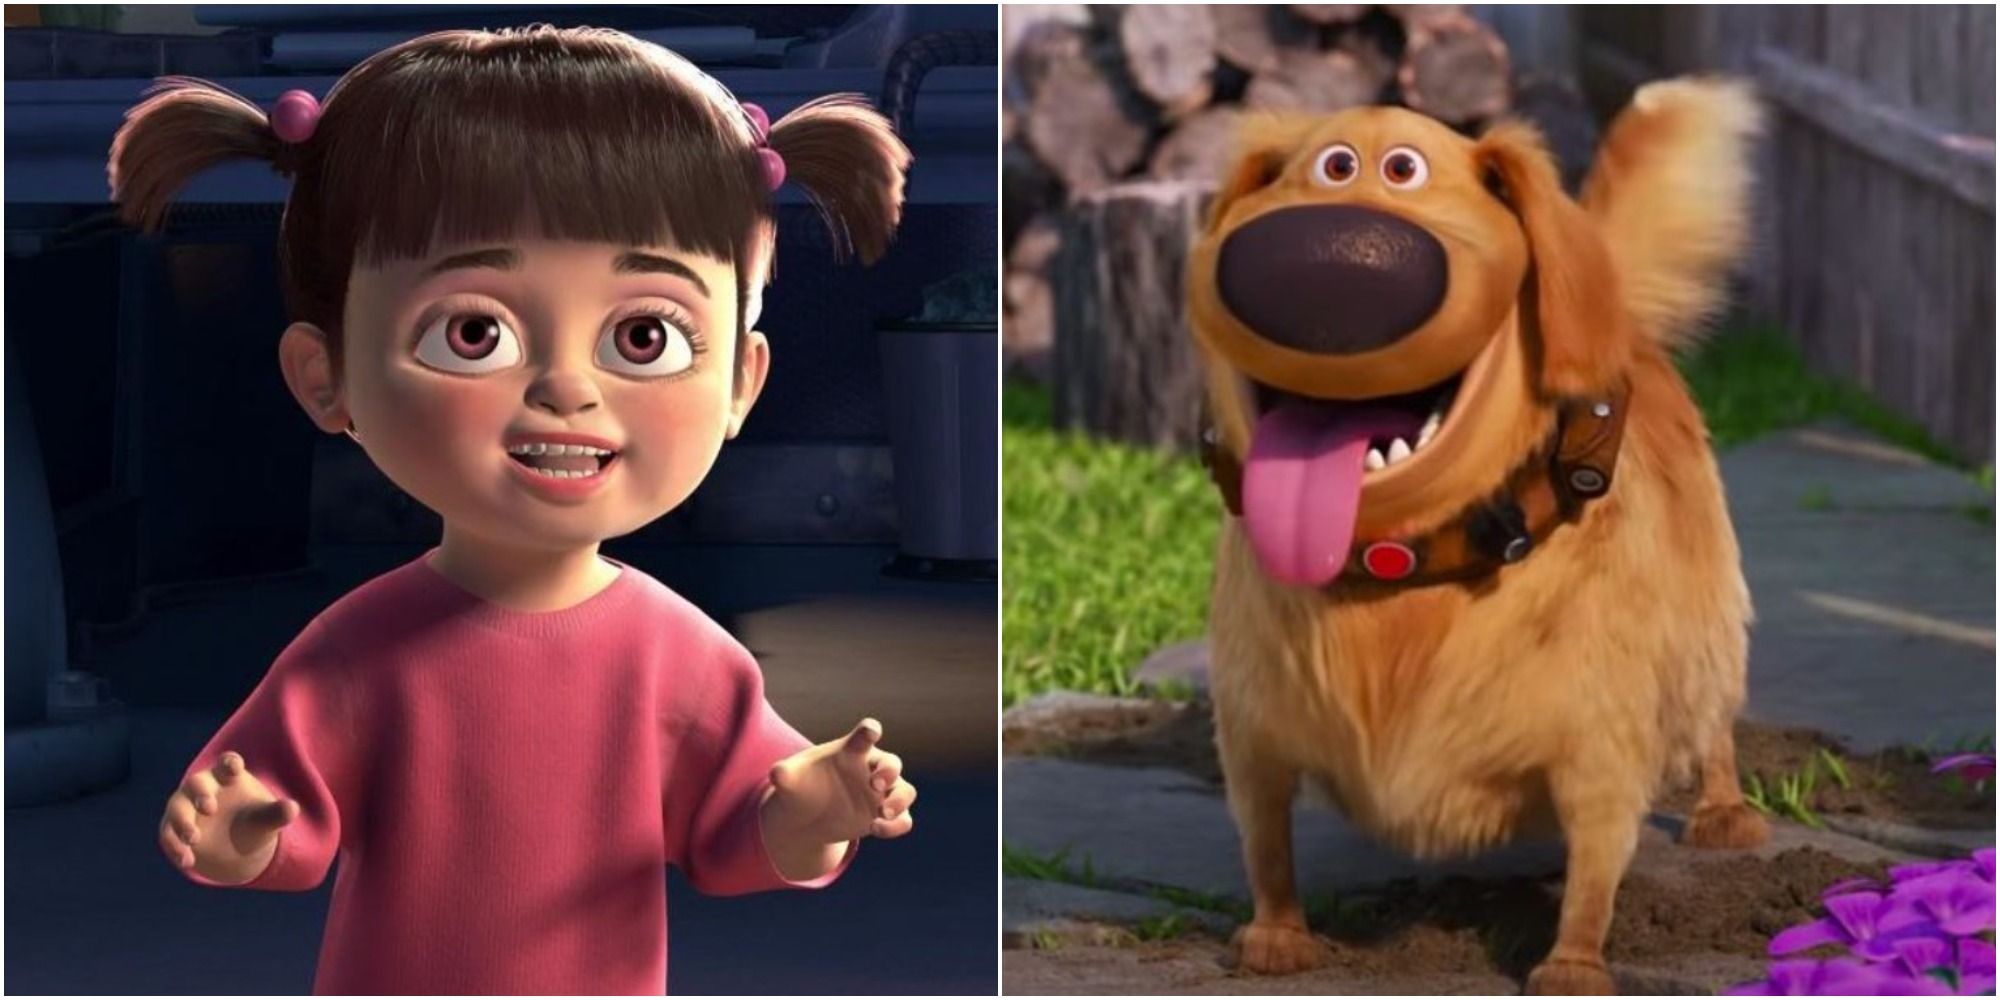 Boo and Dug from Pixar